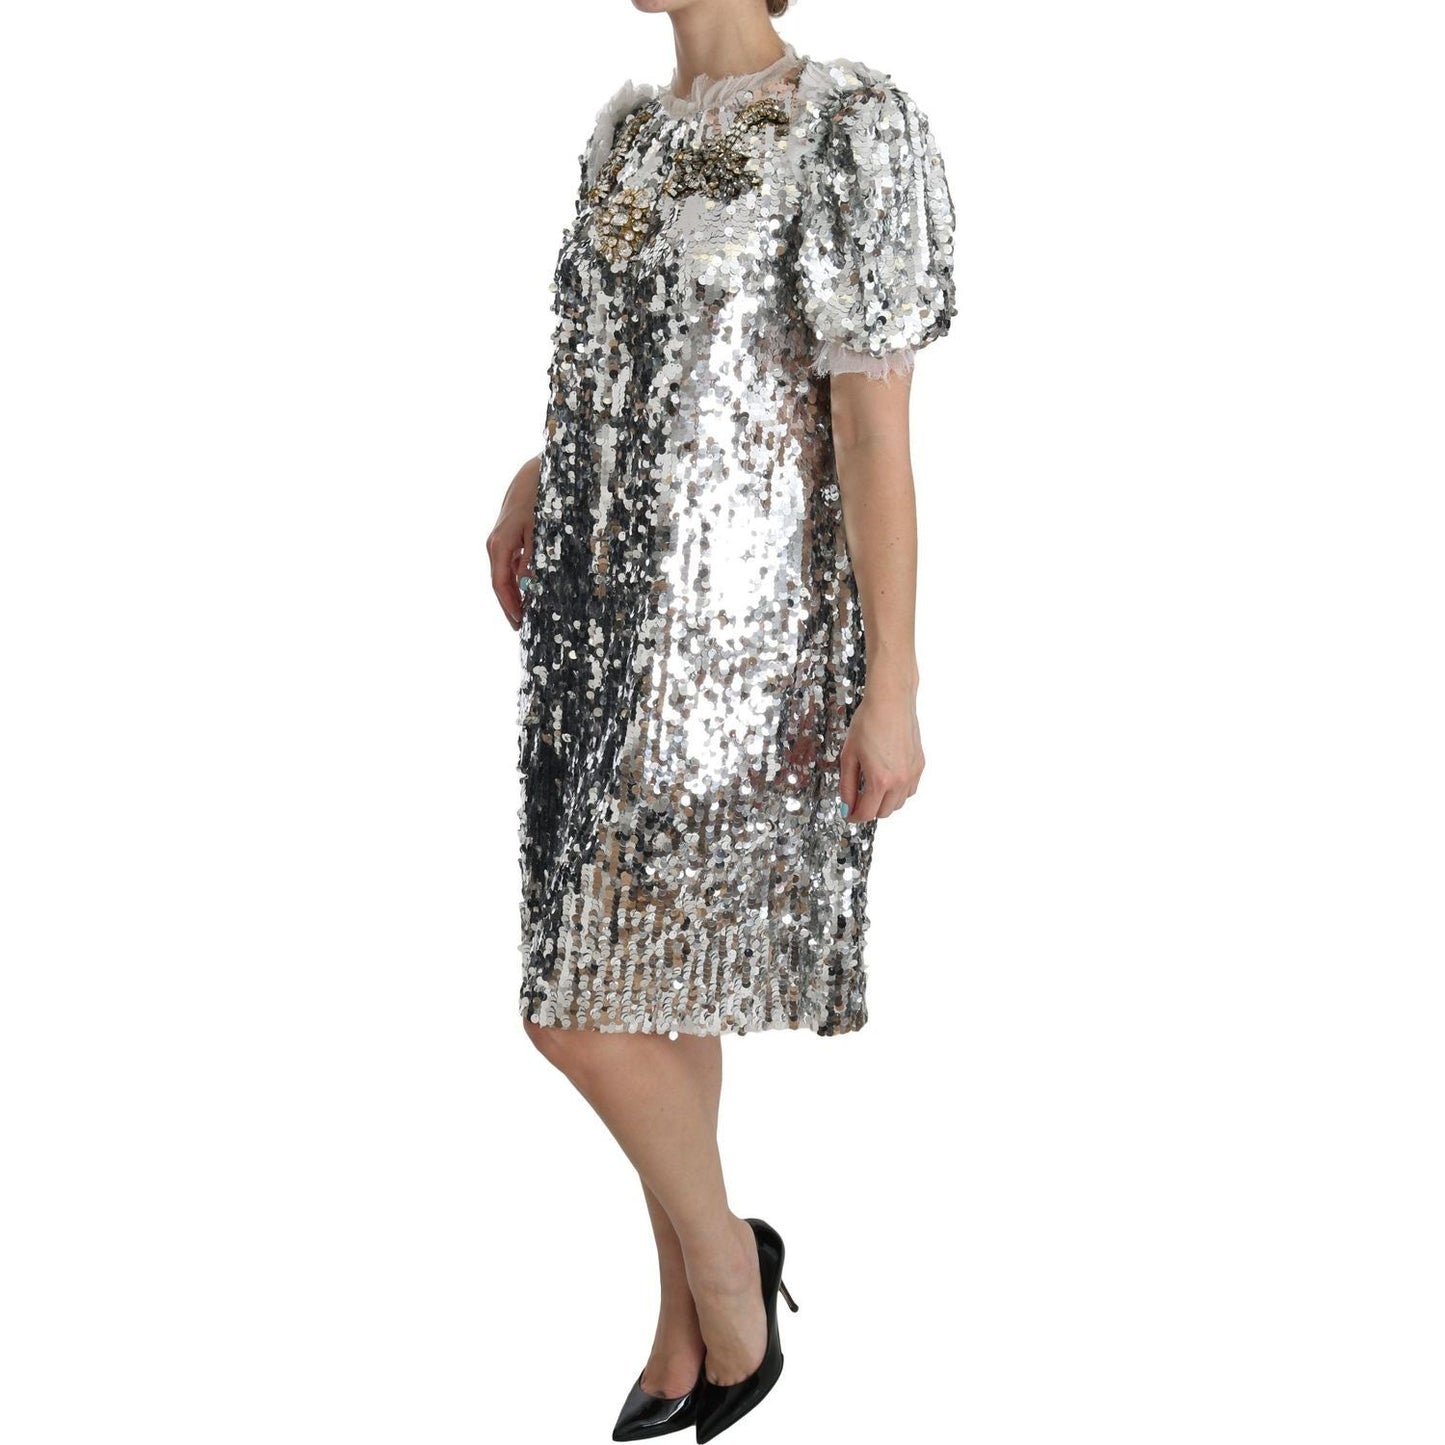 Dolce & GabbanaElegant Silver A-Line Dress with Crystal AccentsMcRichard Designer Brands£1479.00